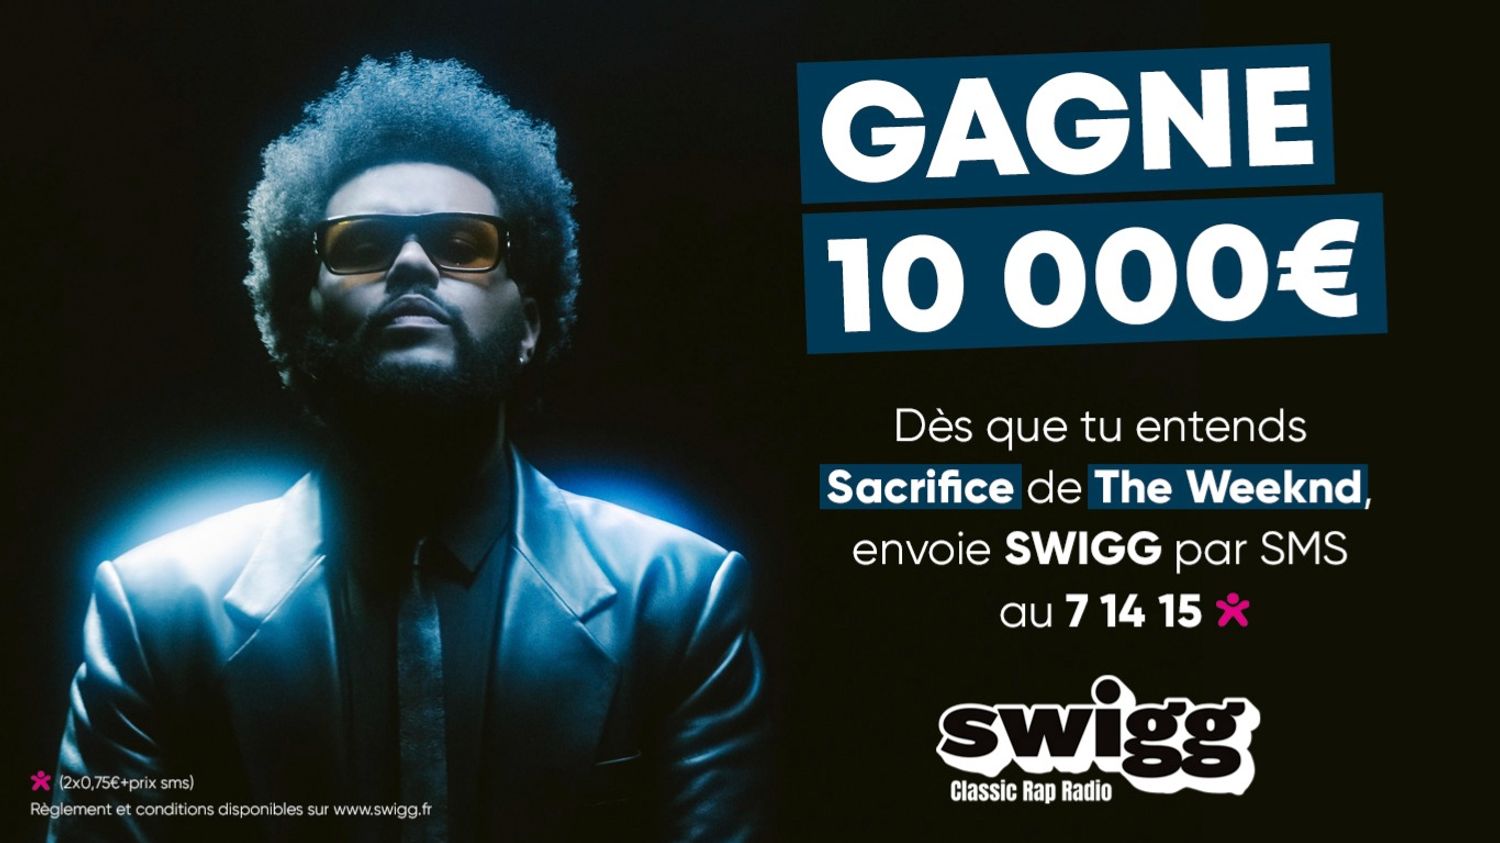 Gagne 10 000€ cash sur Swigg